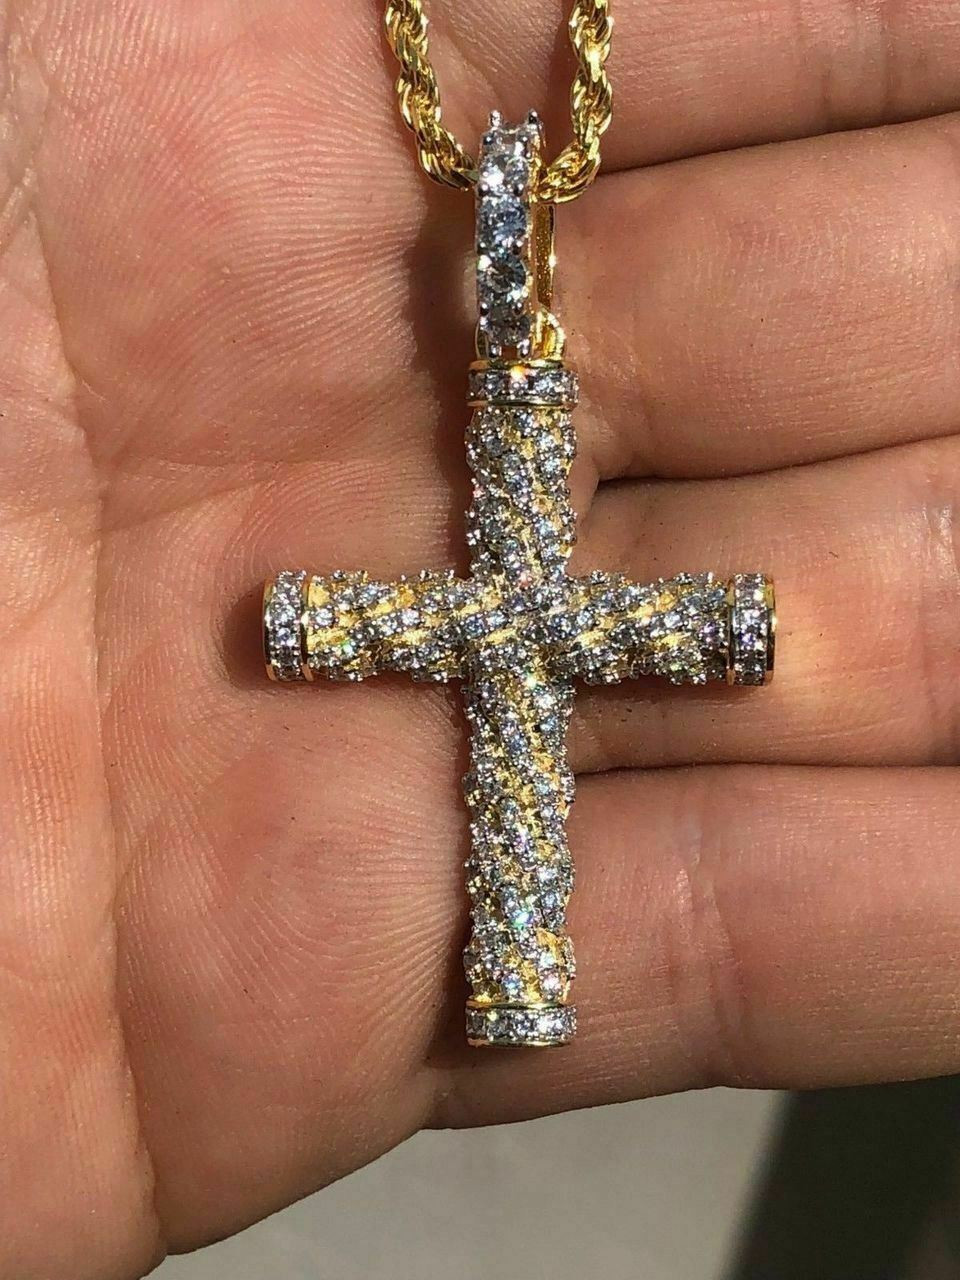 14k Gold Rope Chain Necklace Jesus Cross Charm Pendant CZ Set 18